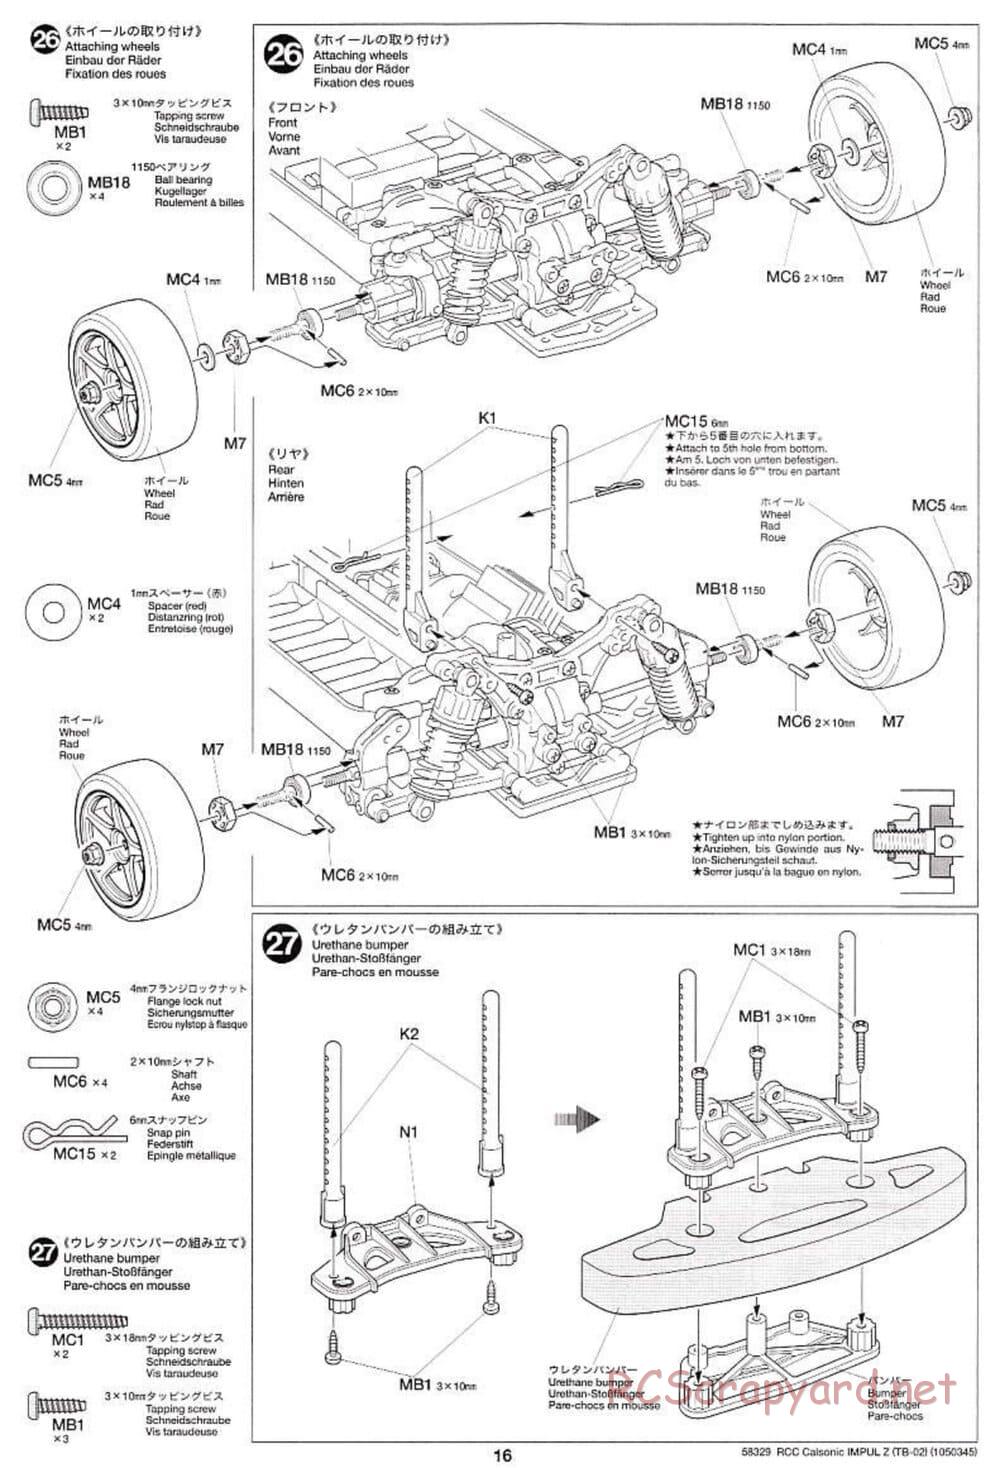 Tamiya - Calsonic Impul Z - TB-02 Chassis - Manual - Page 16